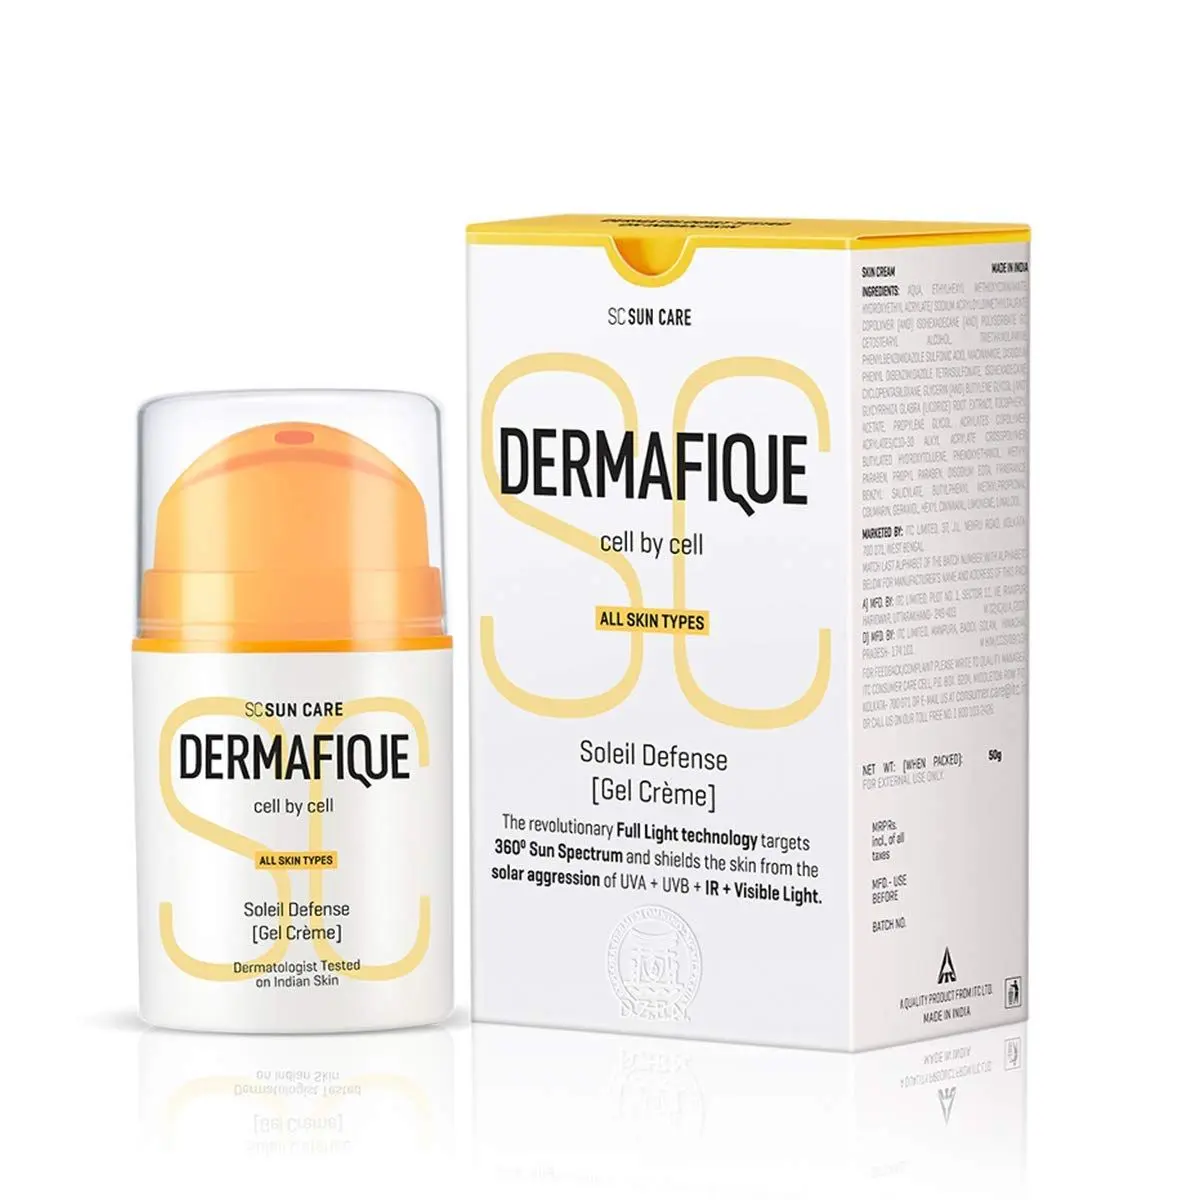 Dermafique Soleil Defense Gel Creme SPF 30 Sunscreen, for All Skin Types, (50 g)